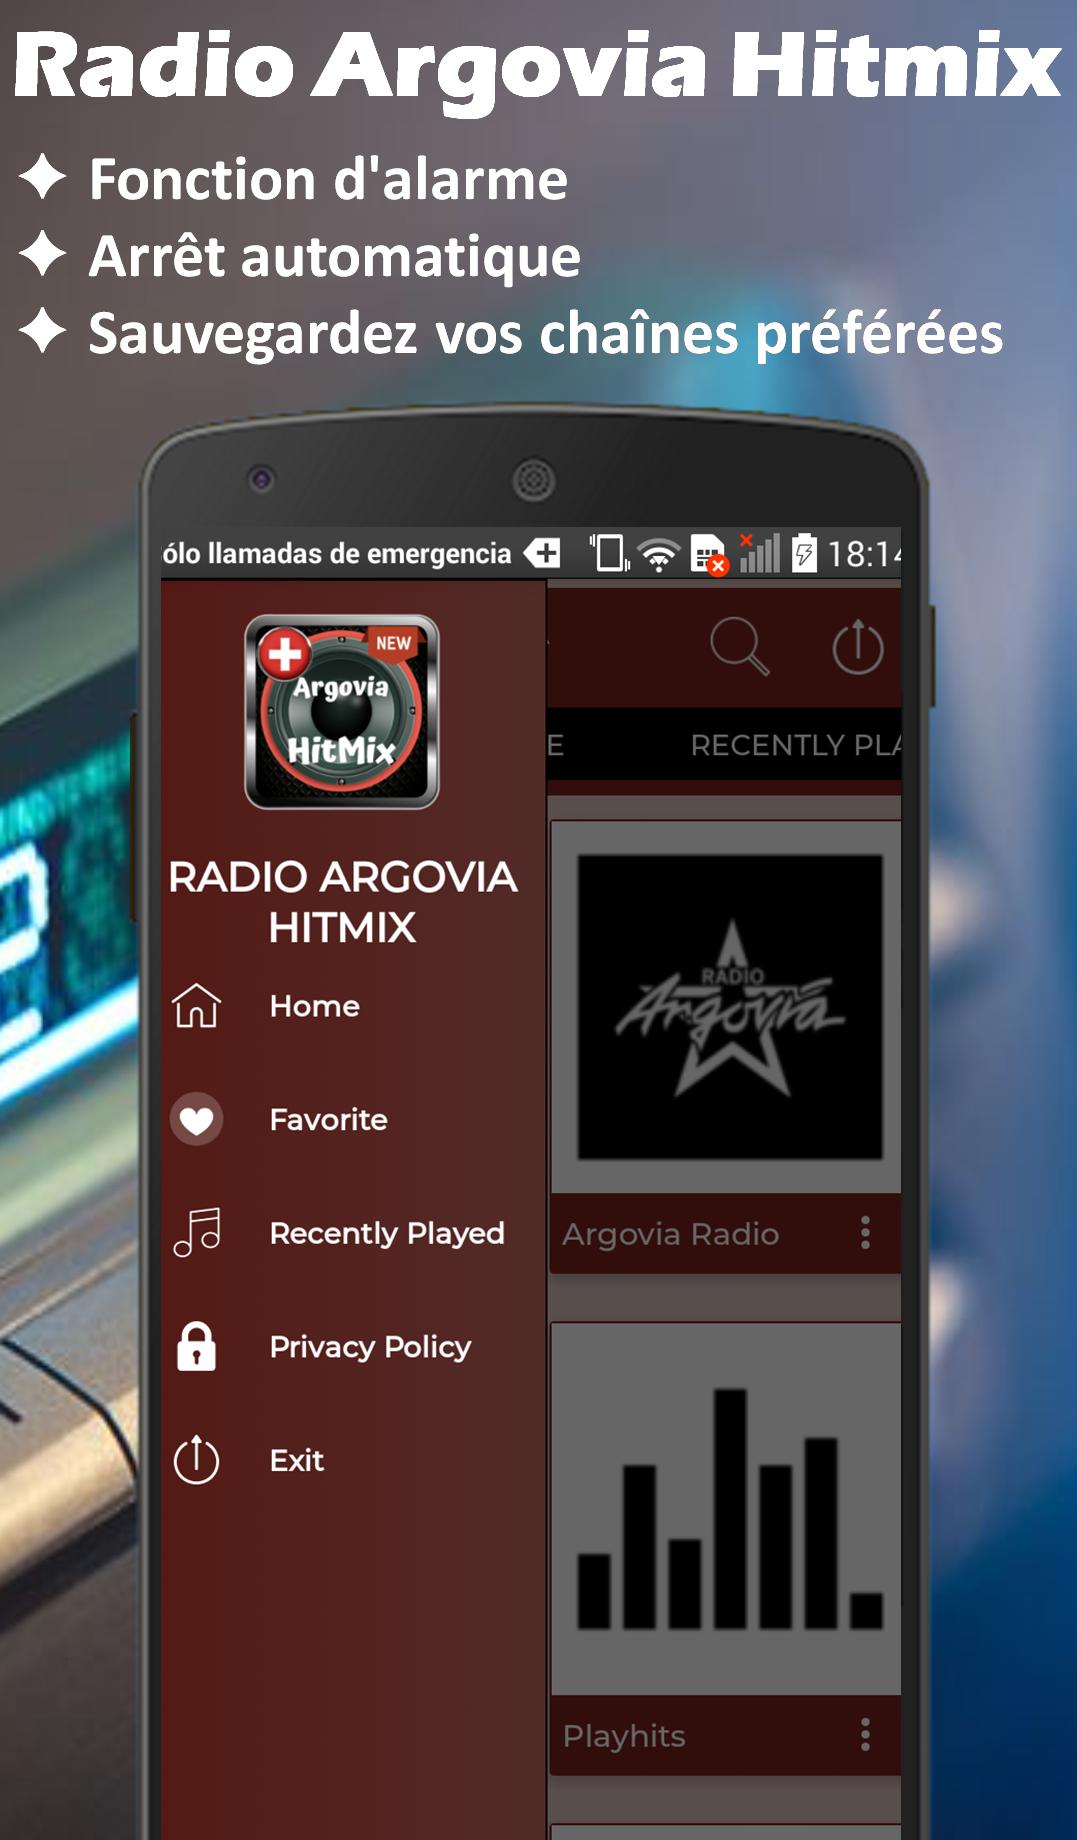 Radio Argovia Hitmix Live for Android - APK Download